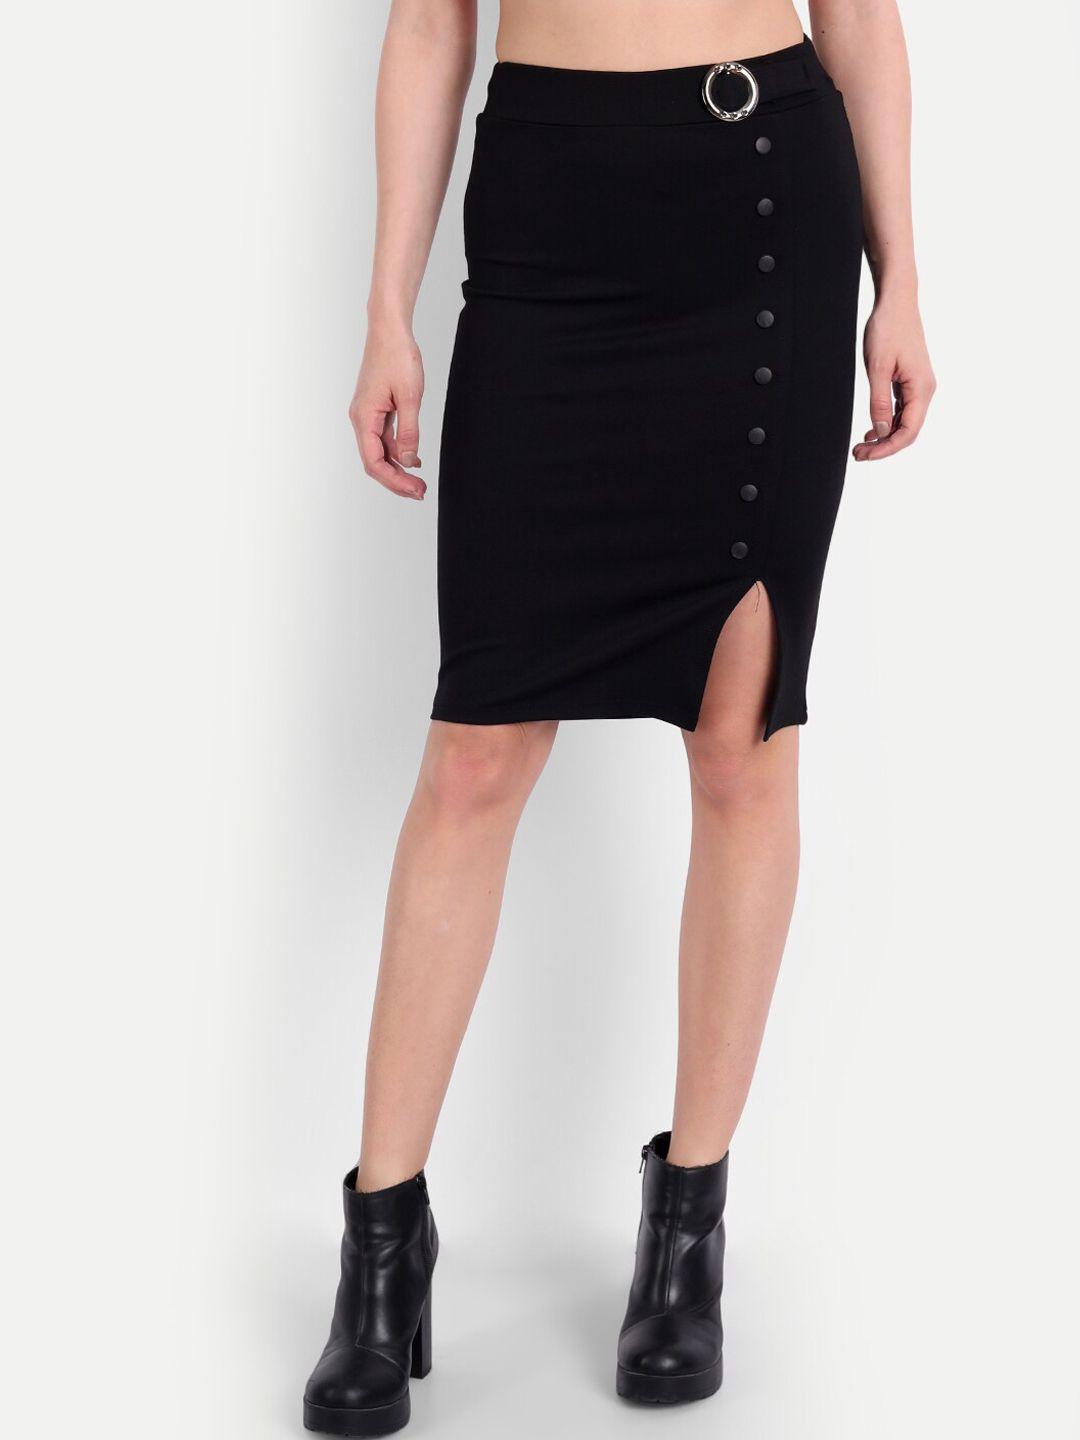 broadstar women black solid pencil knee length skirt